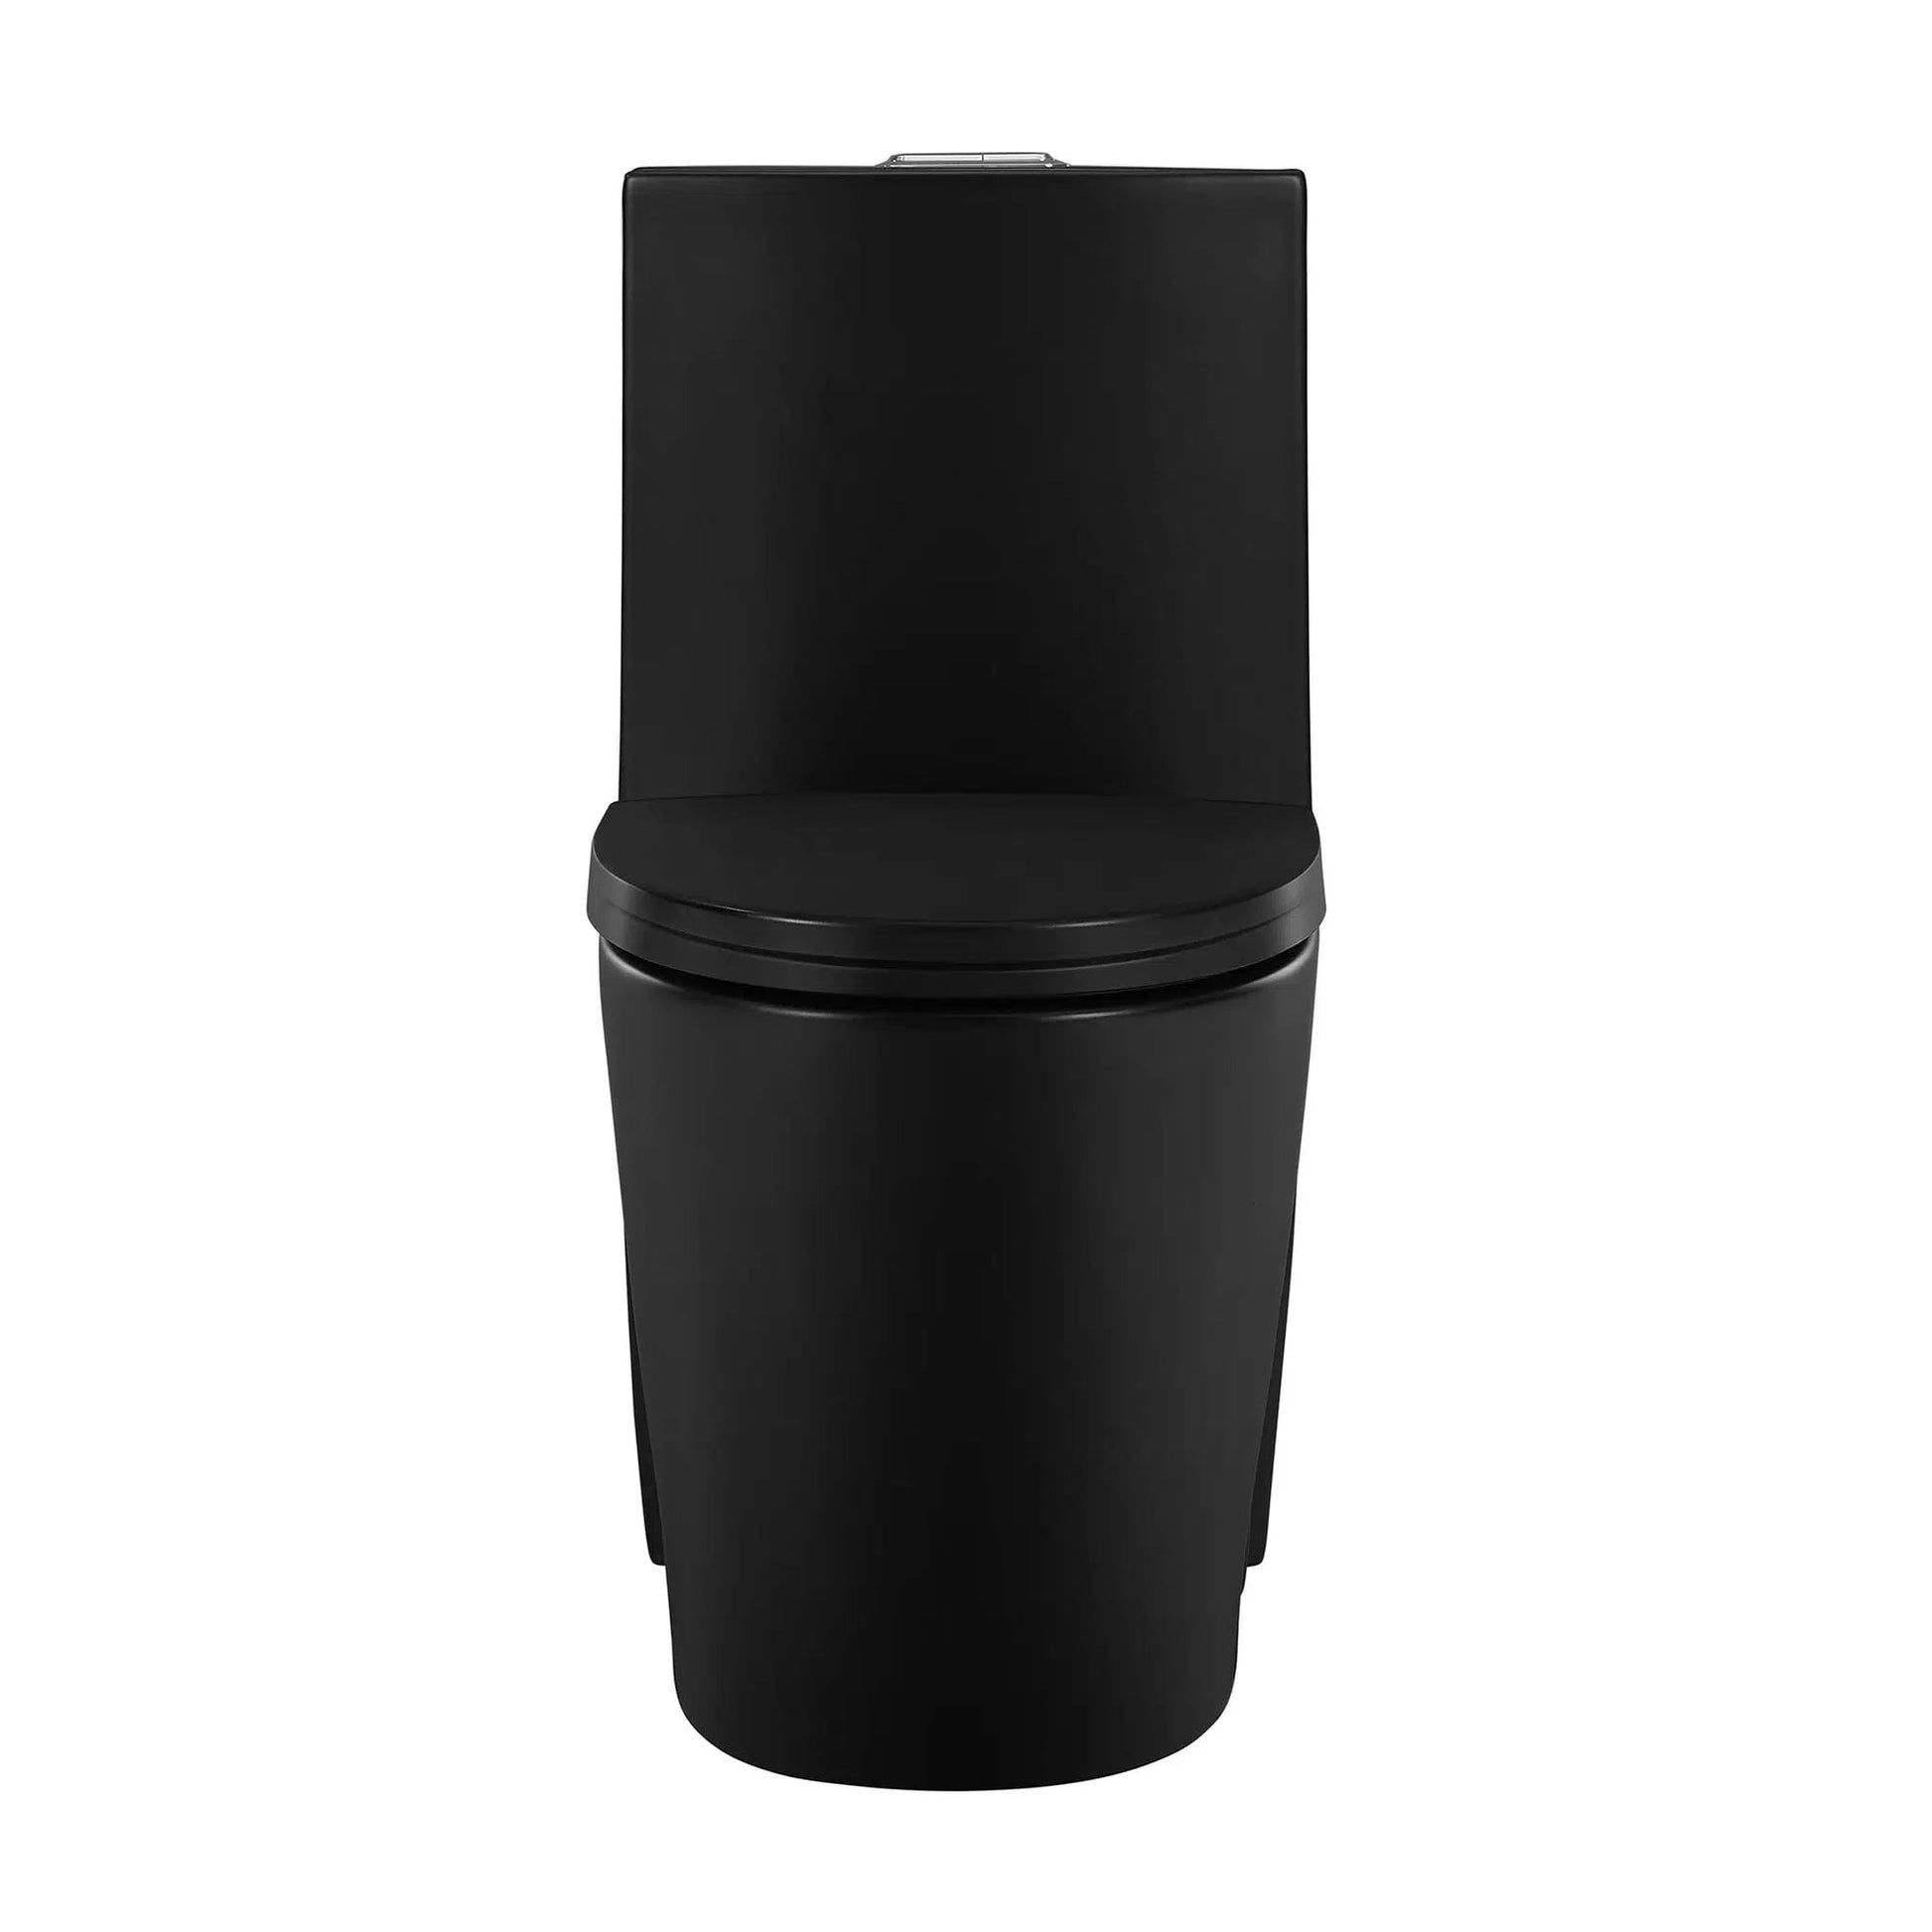 Swiss Madison St. Tropez 15" x 31" Matte Black One-Piece Elongated Floor Mounted Toilet With 1.1/1.6 GPF Vortex™ Dual-Flush Function